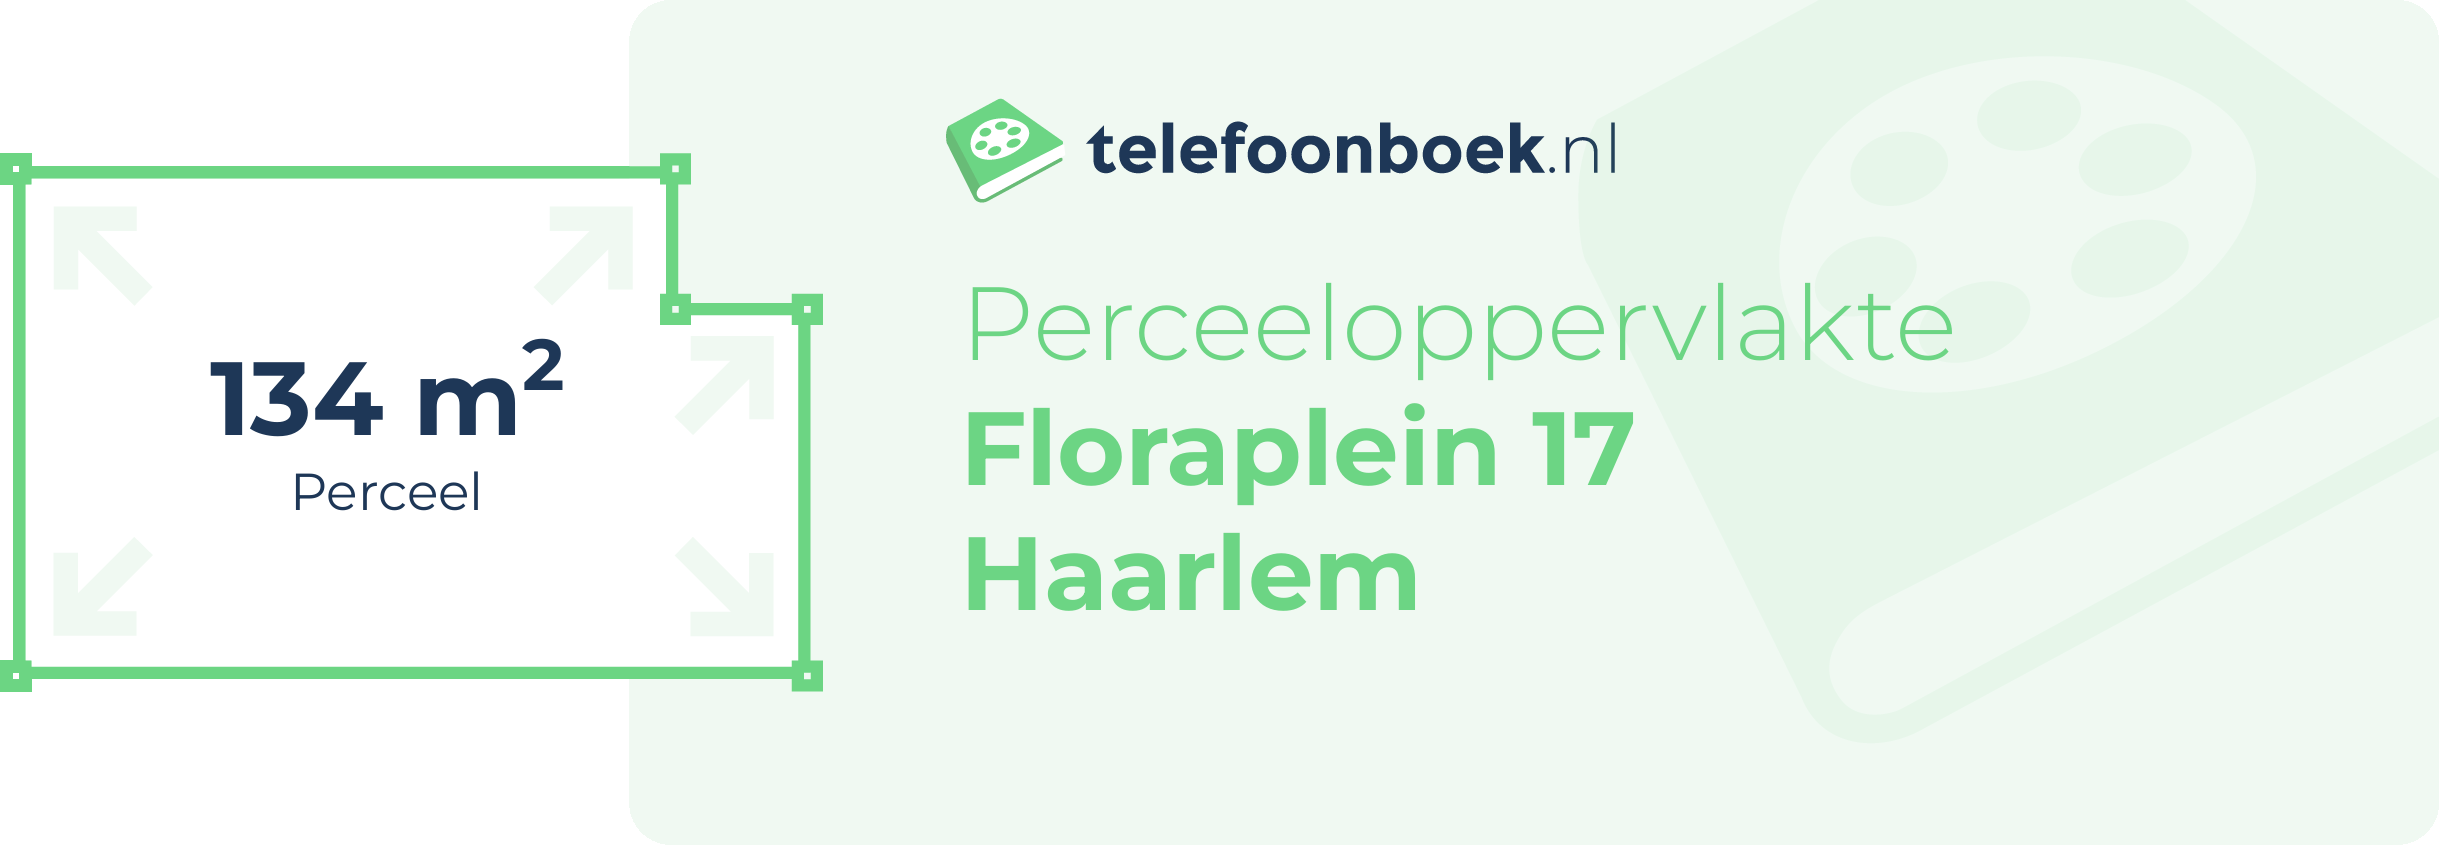 Perceeloppervlakte Floraplein 17 Haarlem